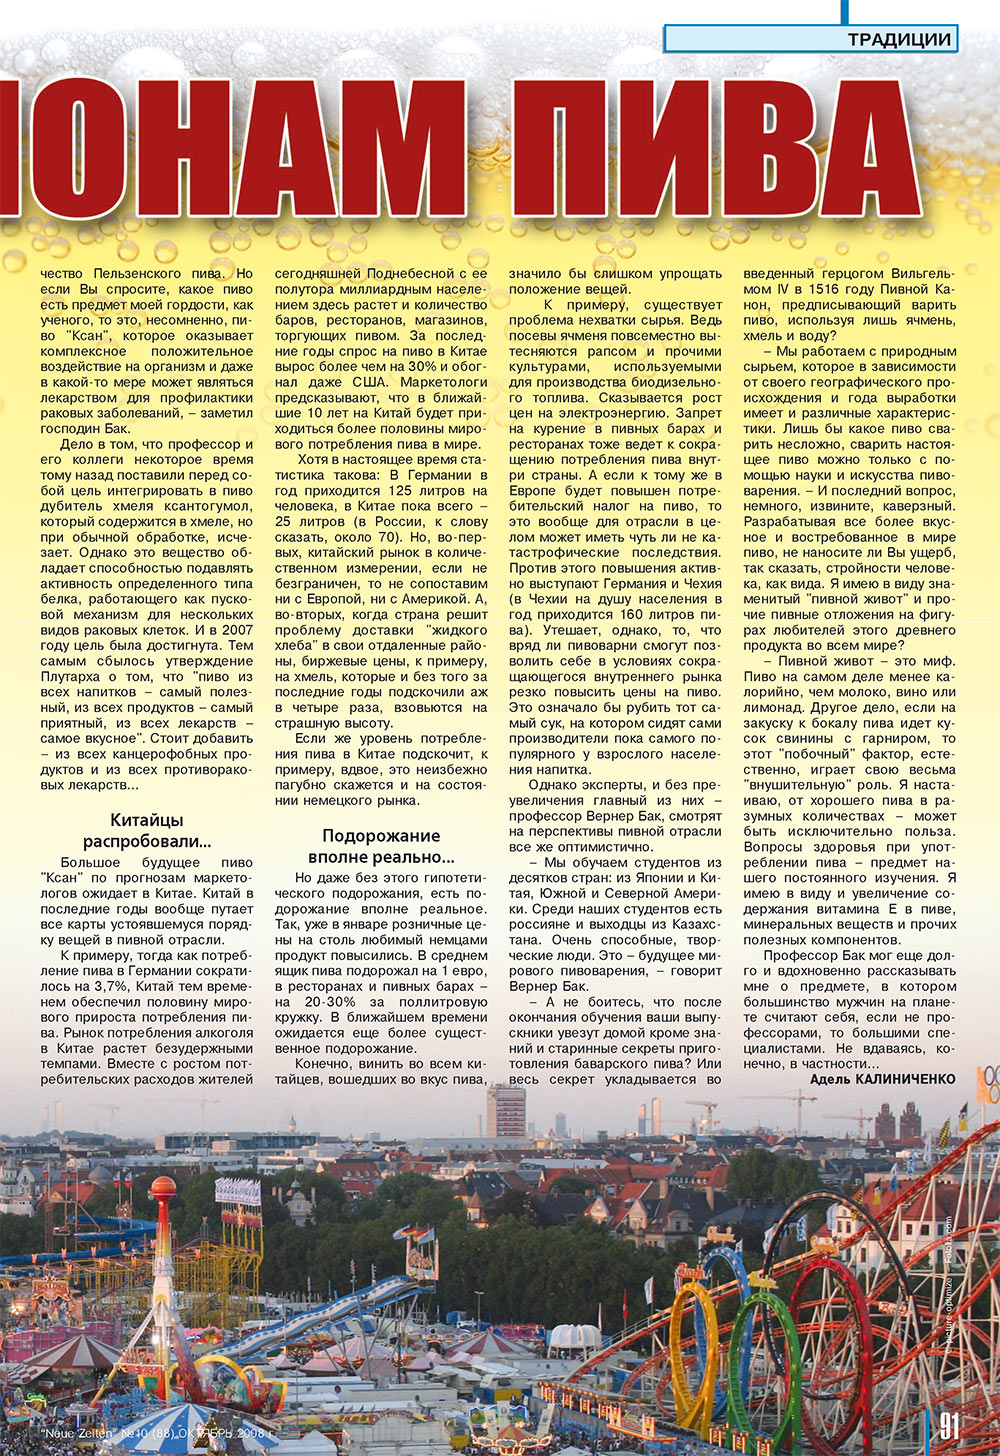 Neue Zeiten (журнал). 2008 год, номер 10, стр. 91